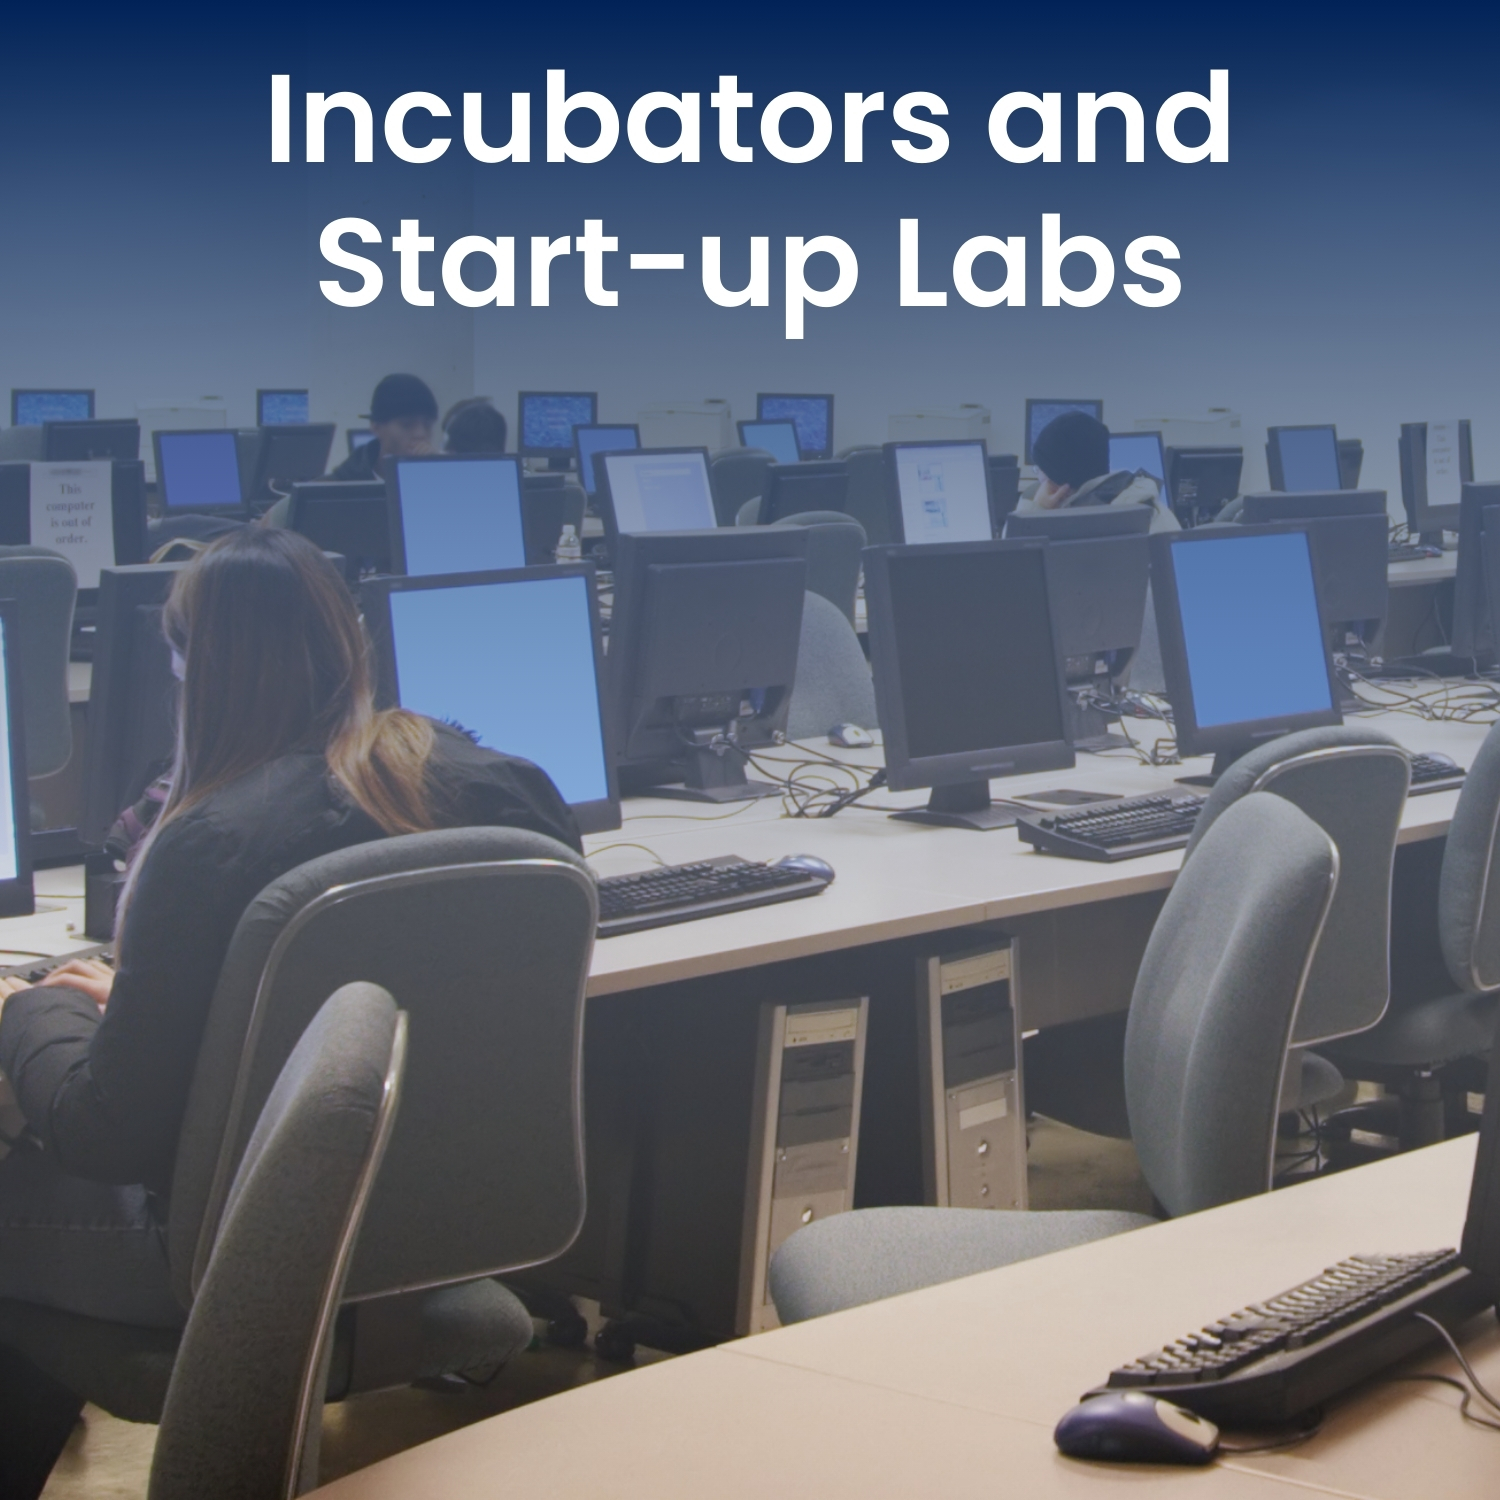 Incubators and Start-up Labs